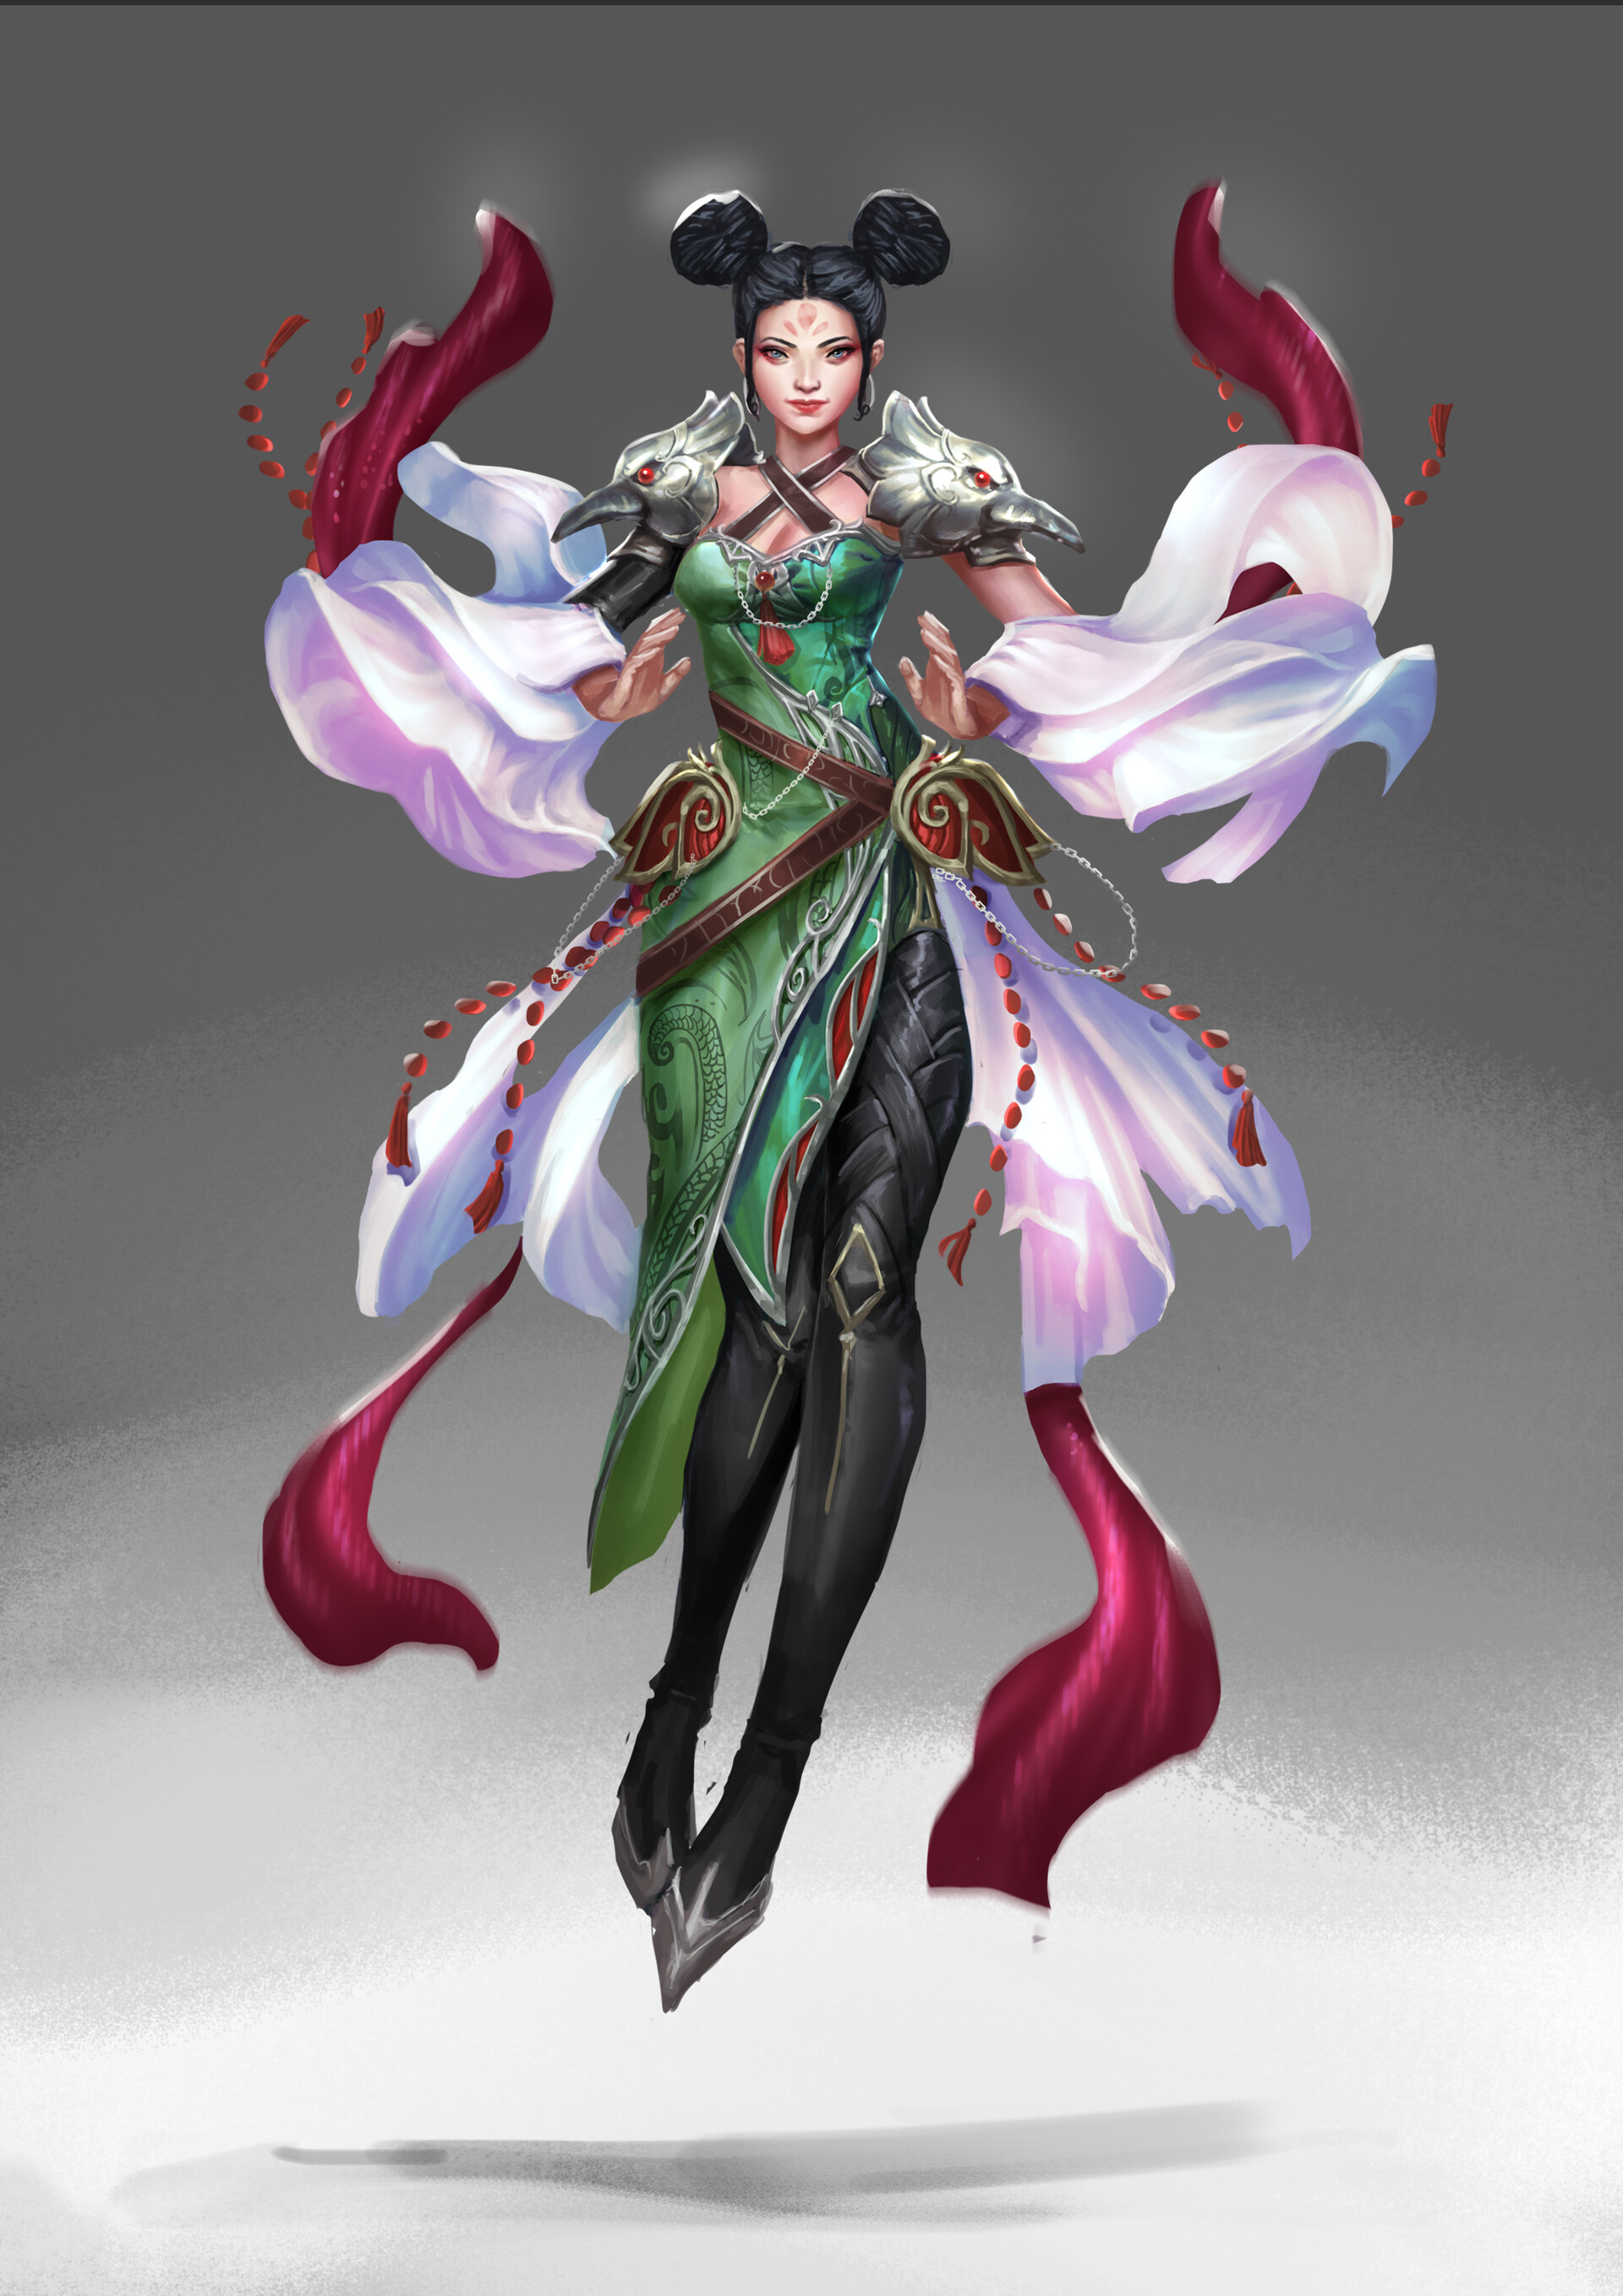 ArtStation - Oriental character